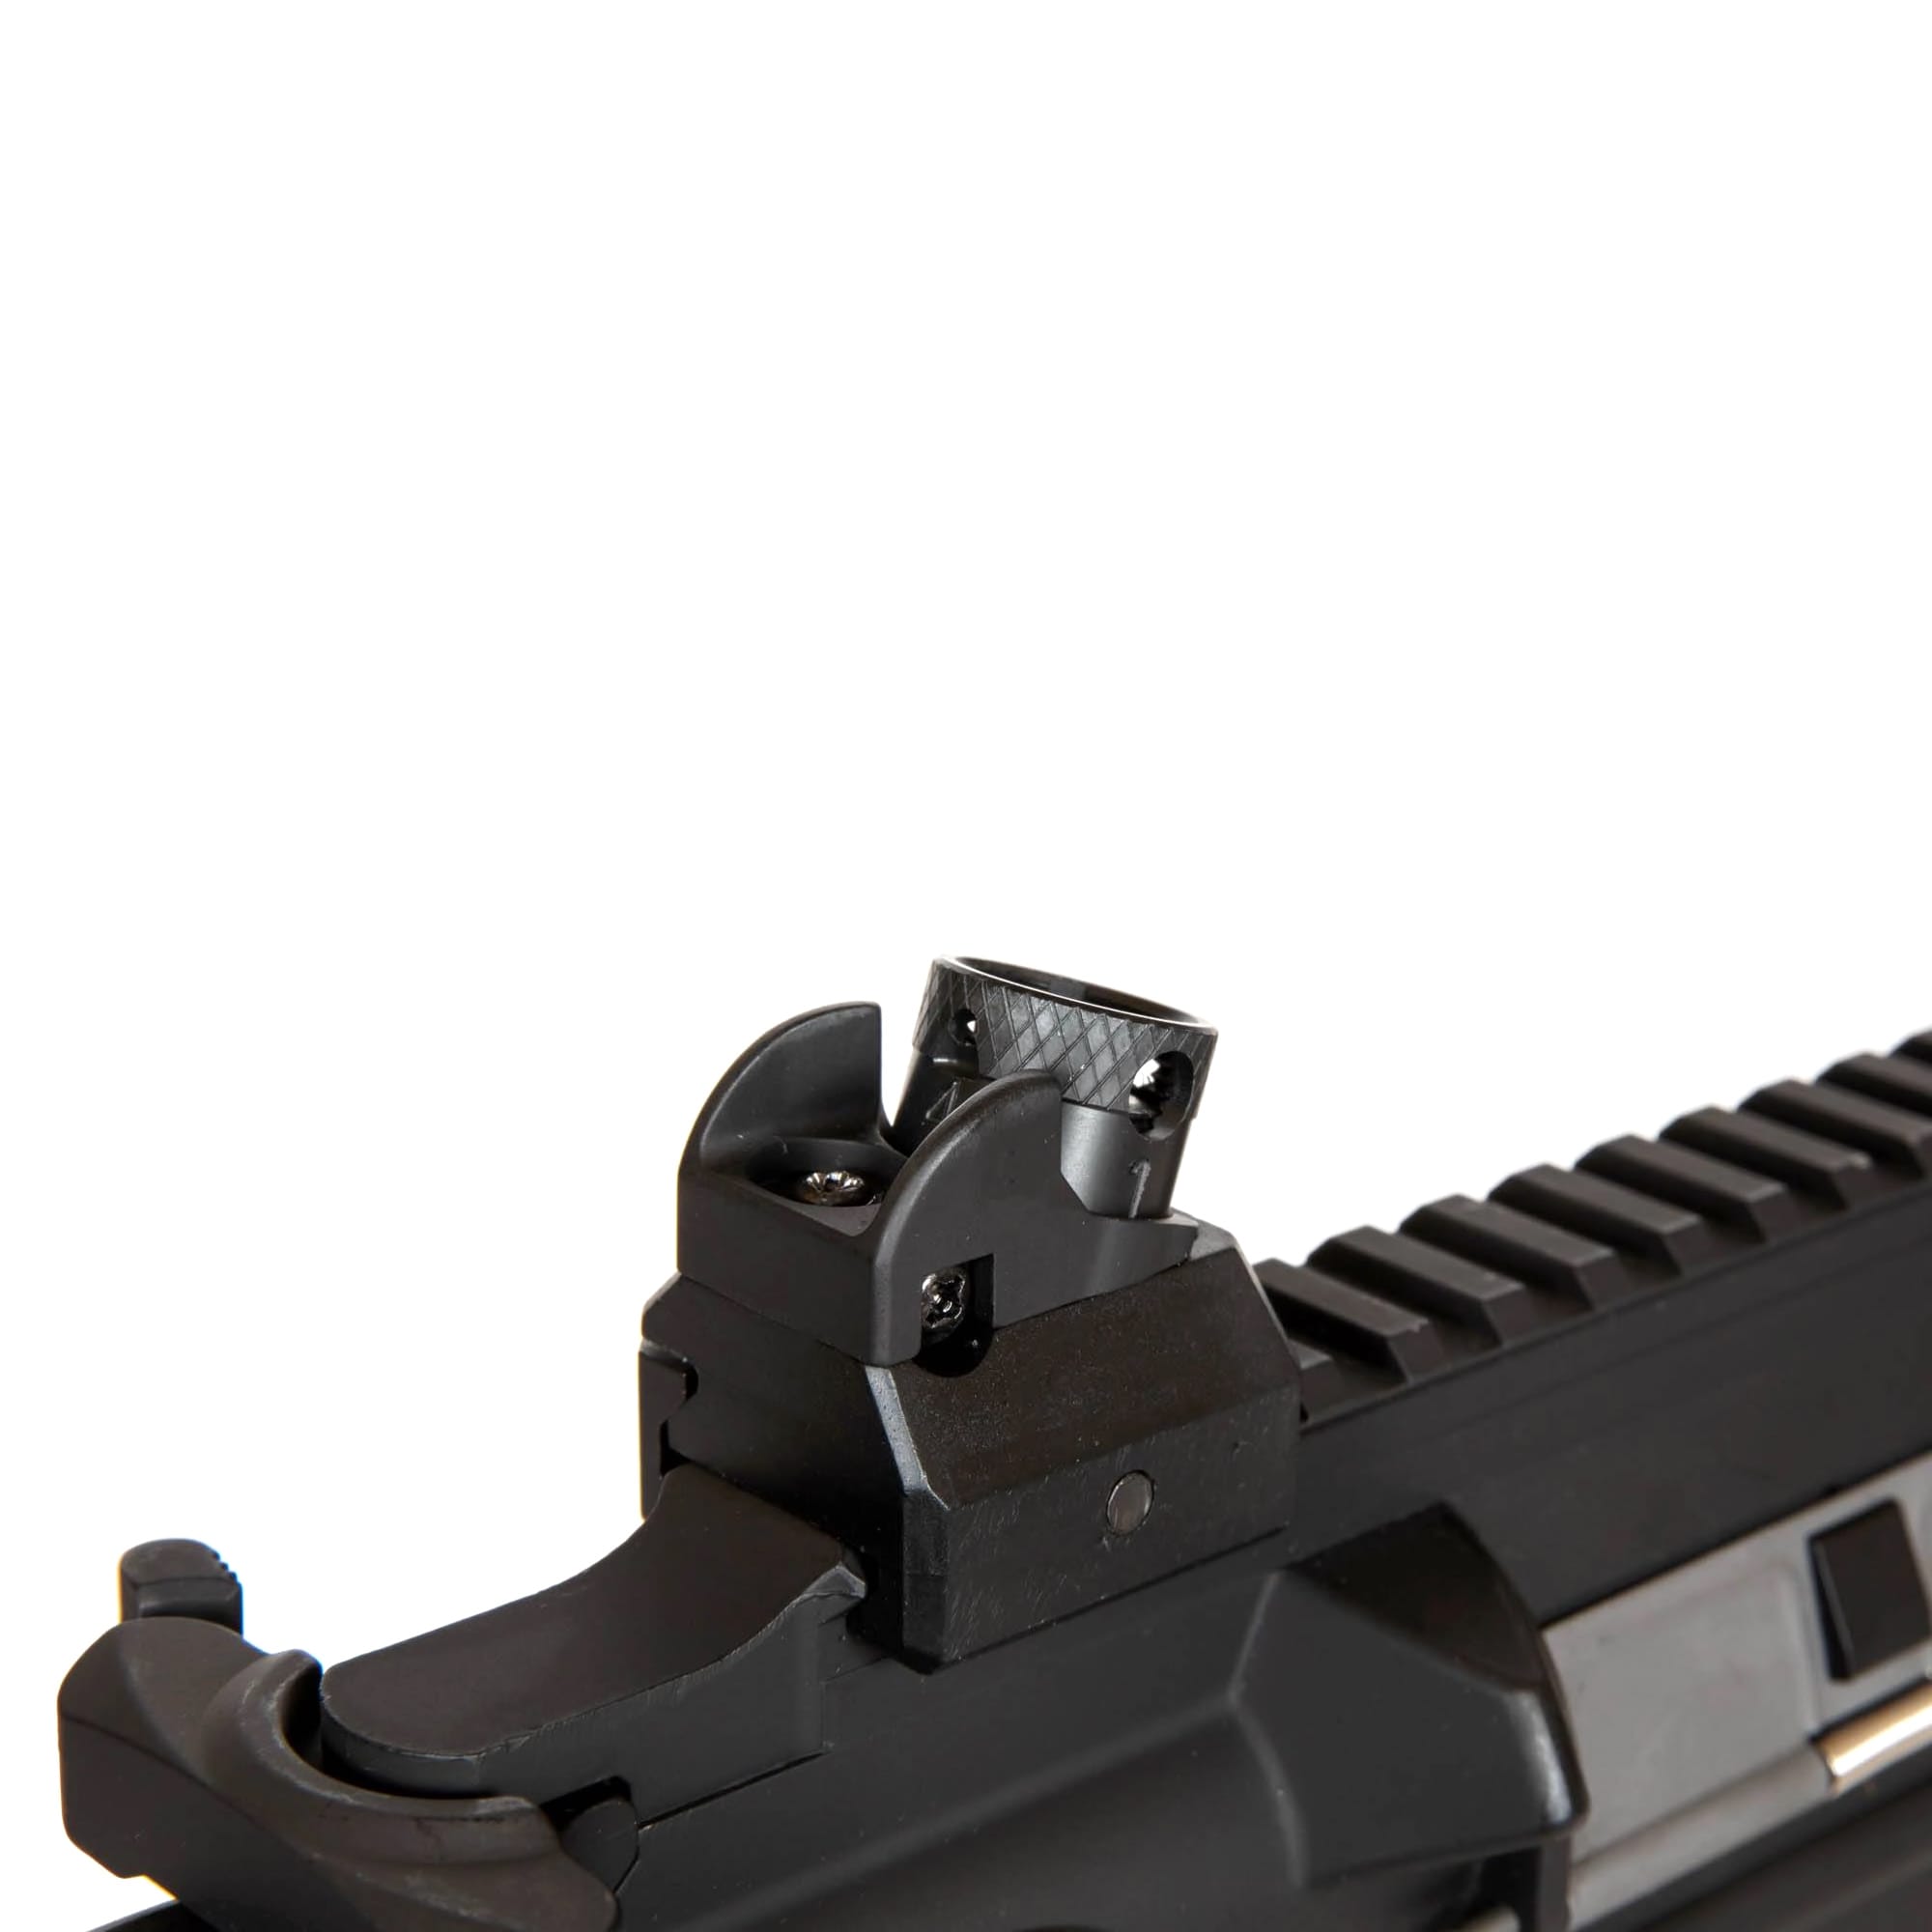 Штурмова гвинтівка AEG Specna Arms SA-H20 EDGE 2.0 - Black